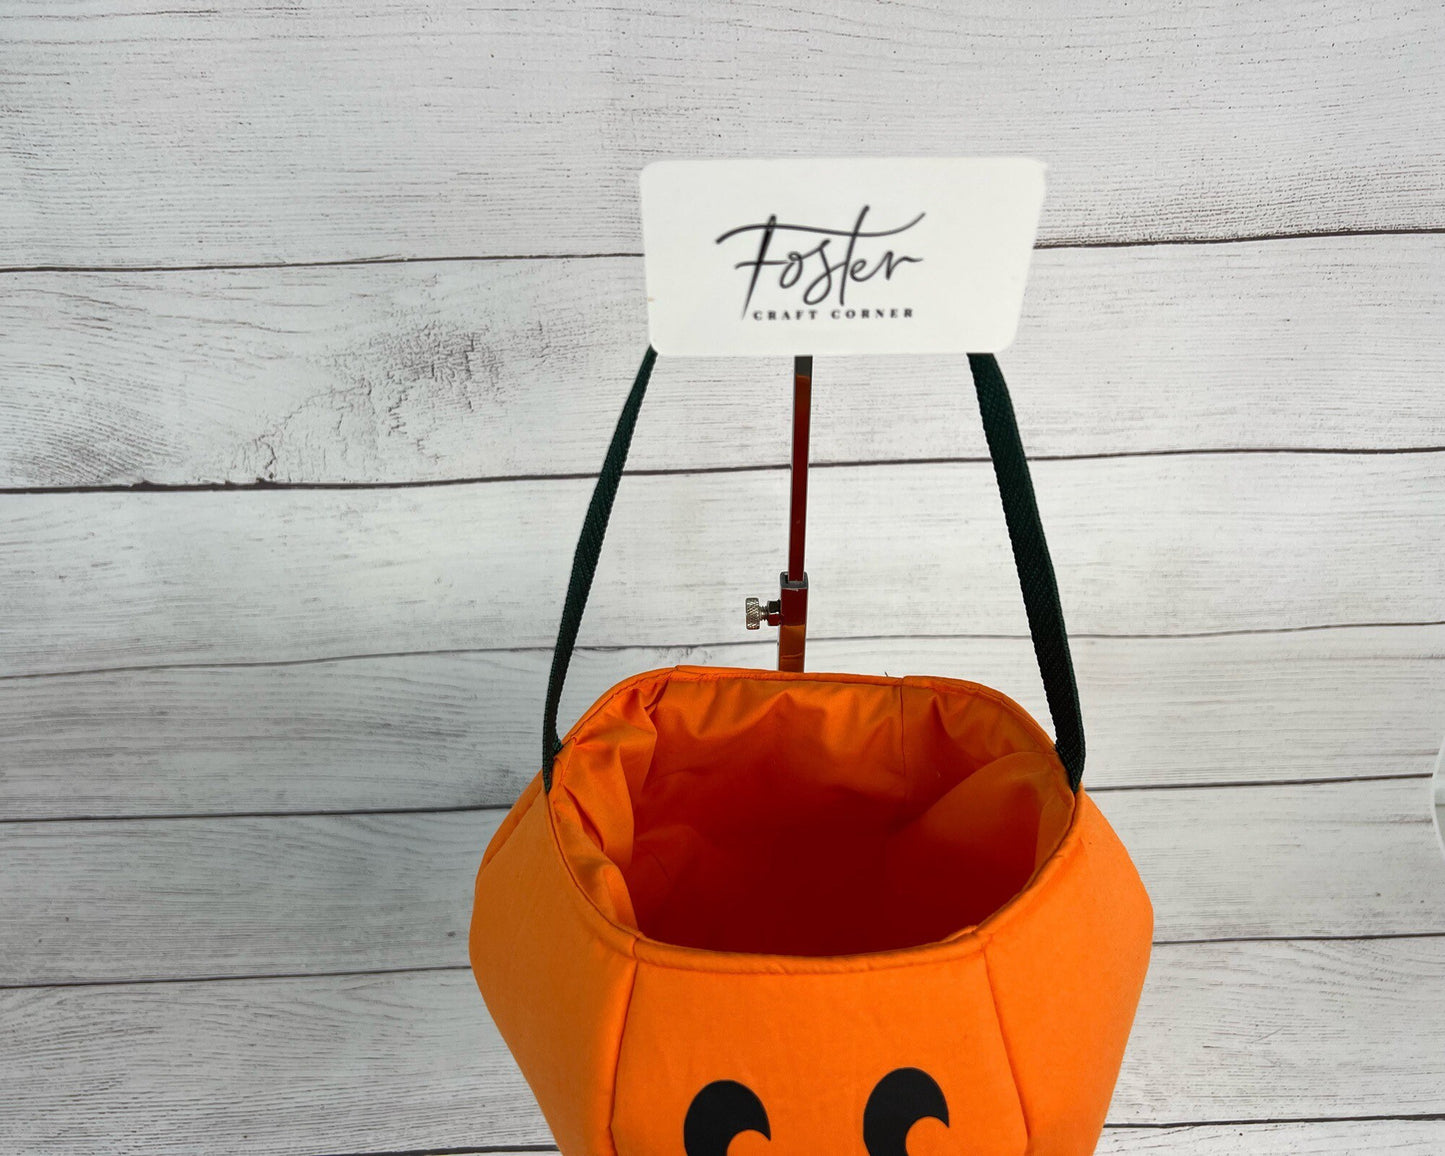 Classic Jack O’Lantern Tote Bag - Bag - Tote - Orange - Jack -Pumpkin - Smile - Everyday - Holiday - Easter - Halloween - Party - Gift